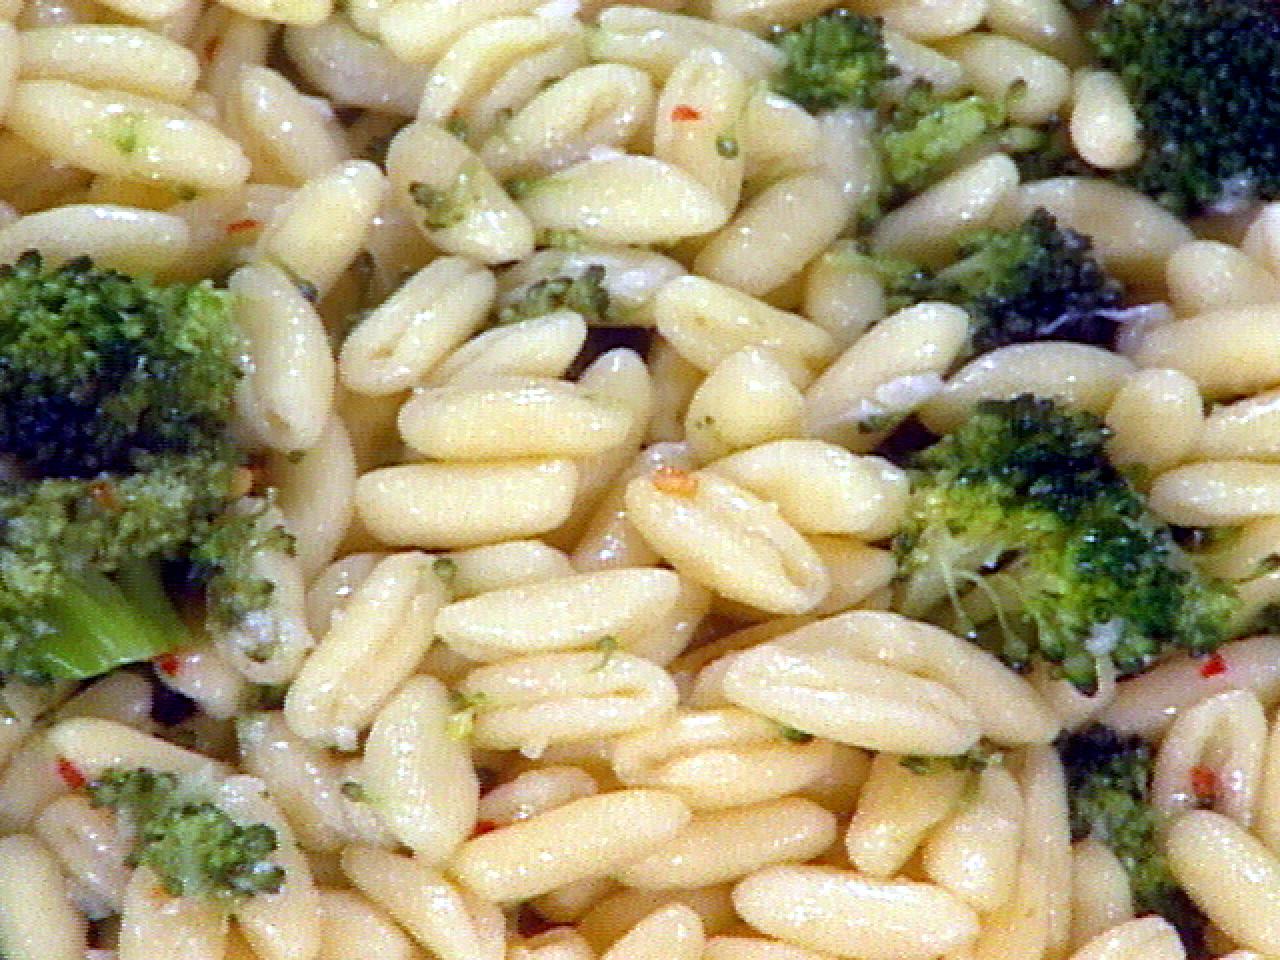 https://food.fnr.sndimg.com/content/dam/images/food/fullset/2003/12/4/0/ss1b26_cavatelli_broccoli_garlic.jpg.rend.hgtvcom.1280.960.suffix/1386597171548.jpeg